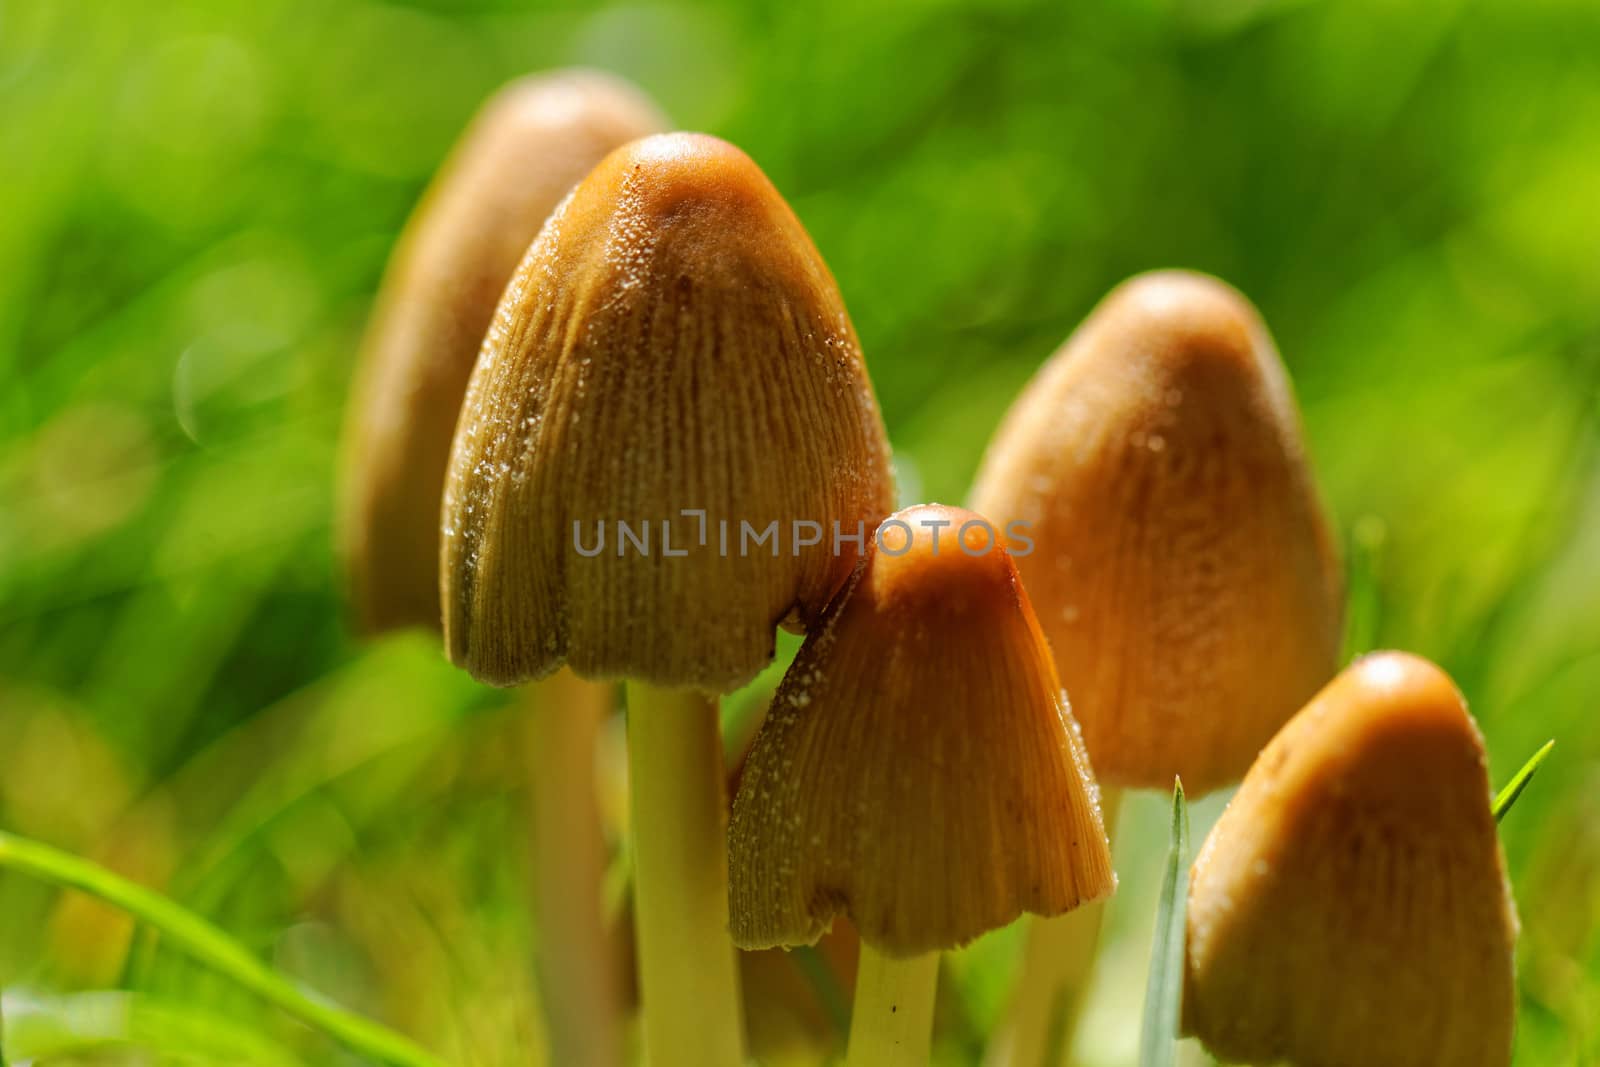 Mushroom growing in the grass